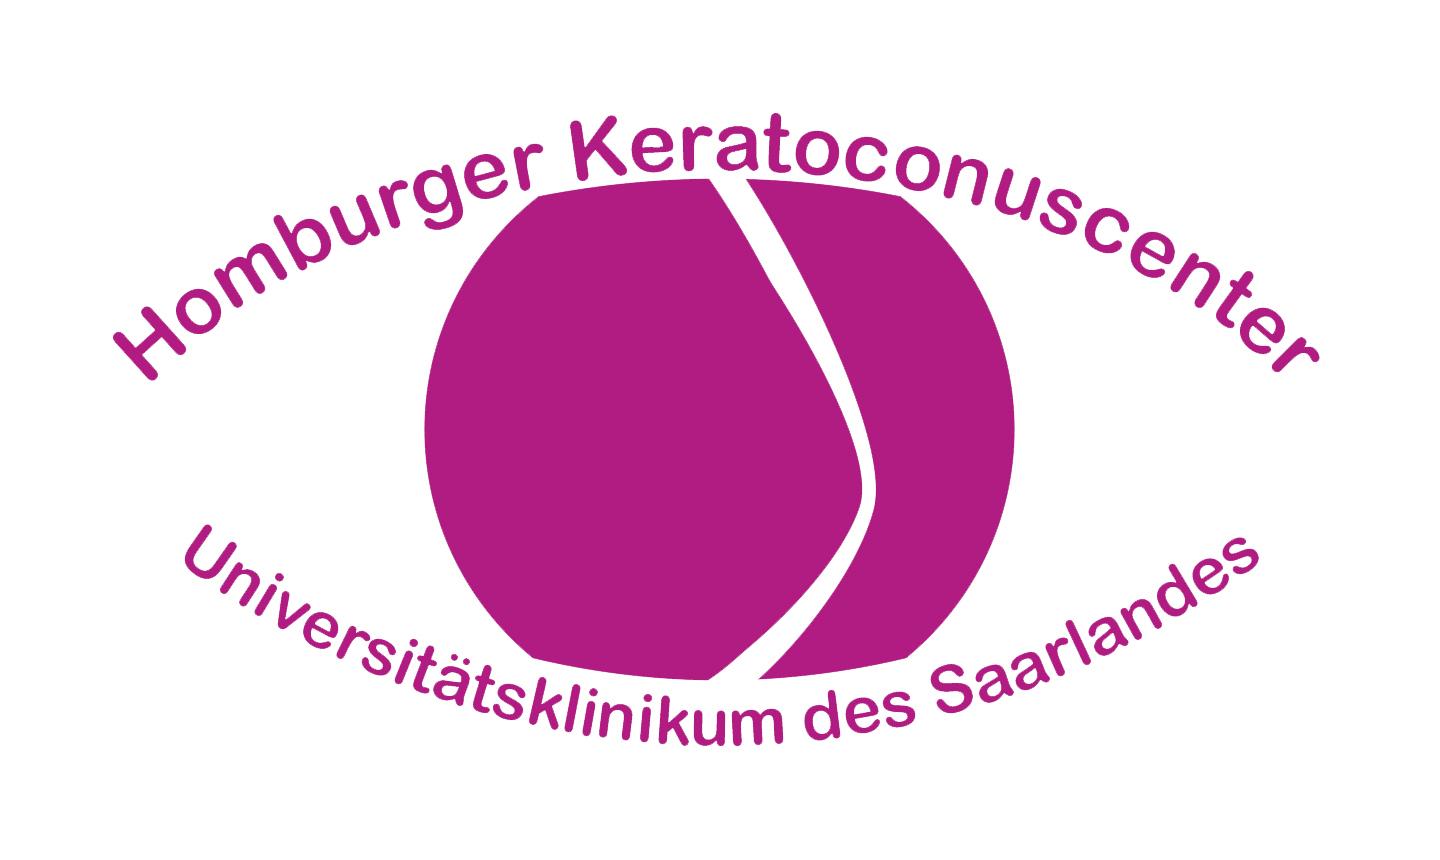 Homburg Keratoconus Center